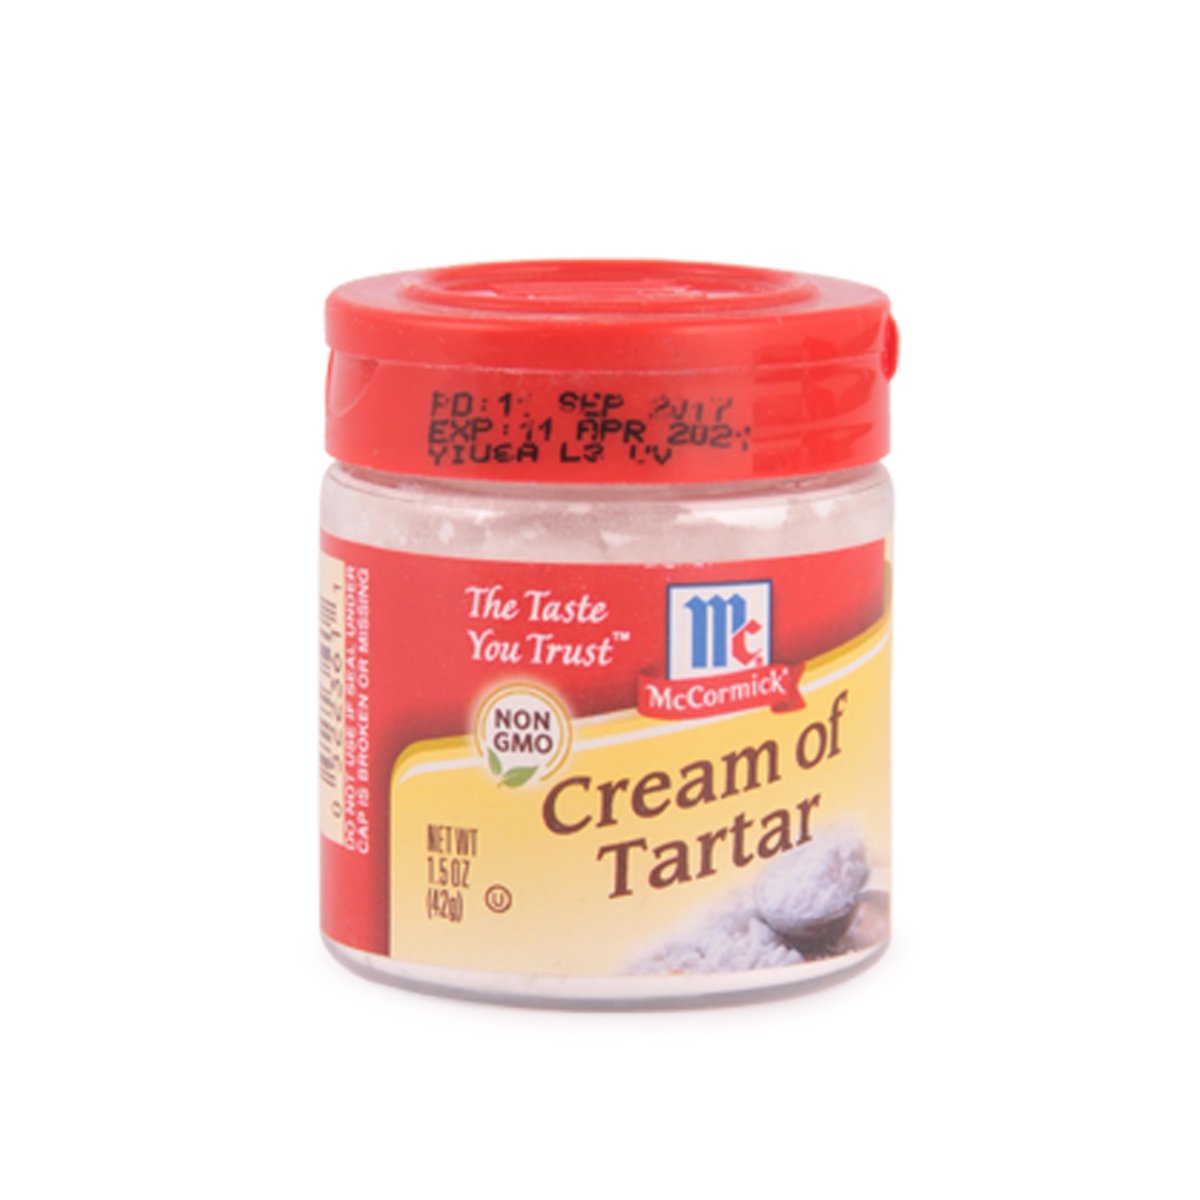 What is Cream of Tartar?